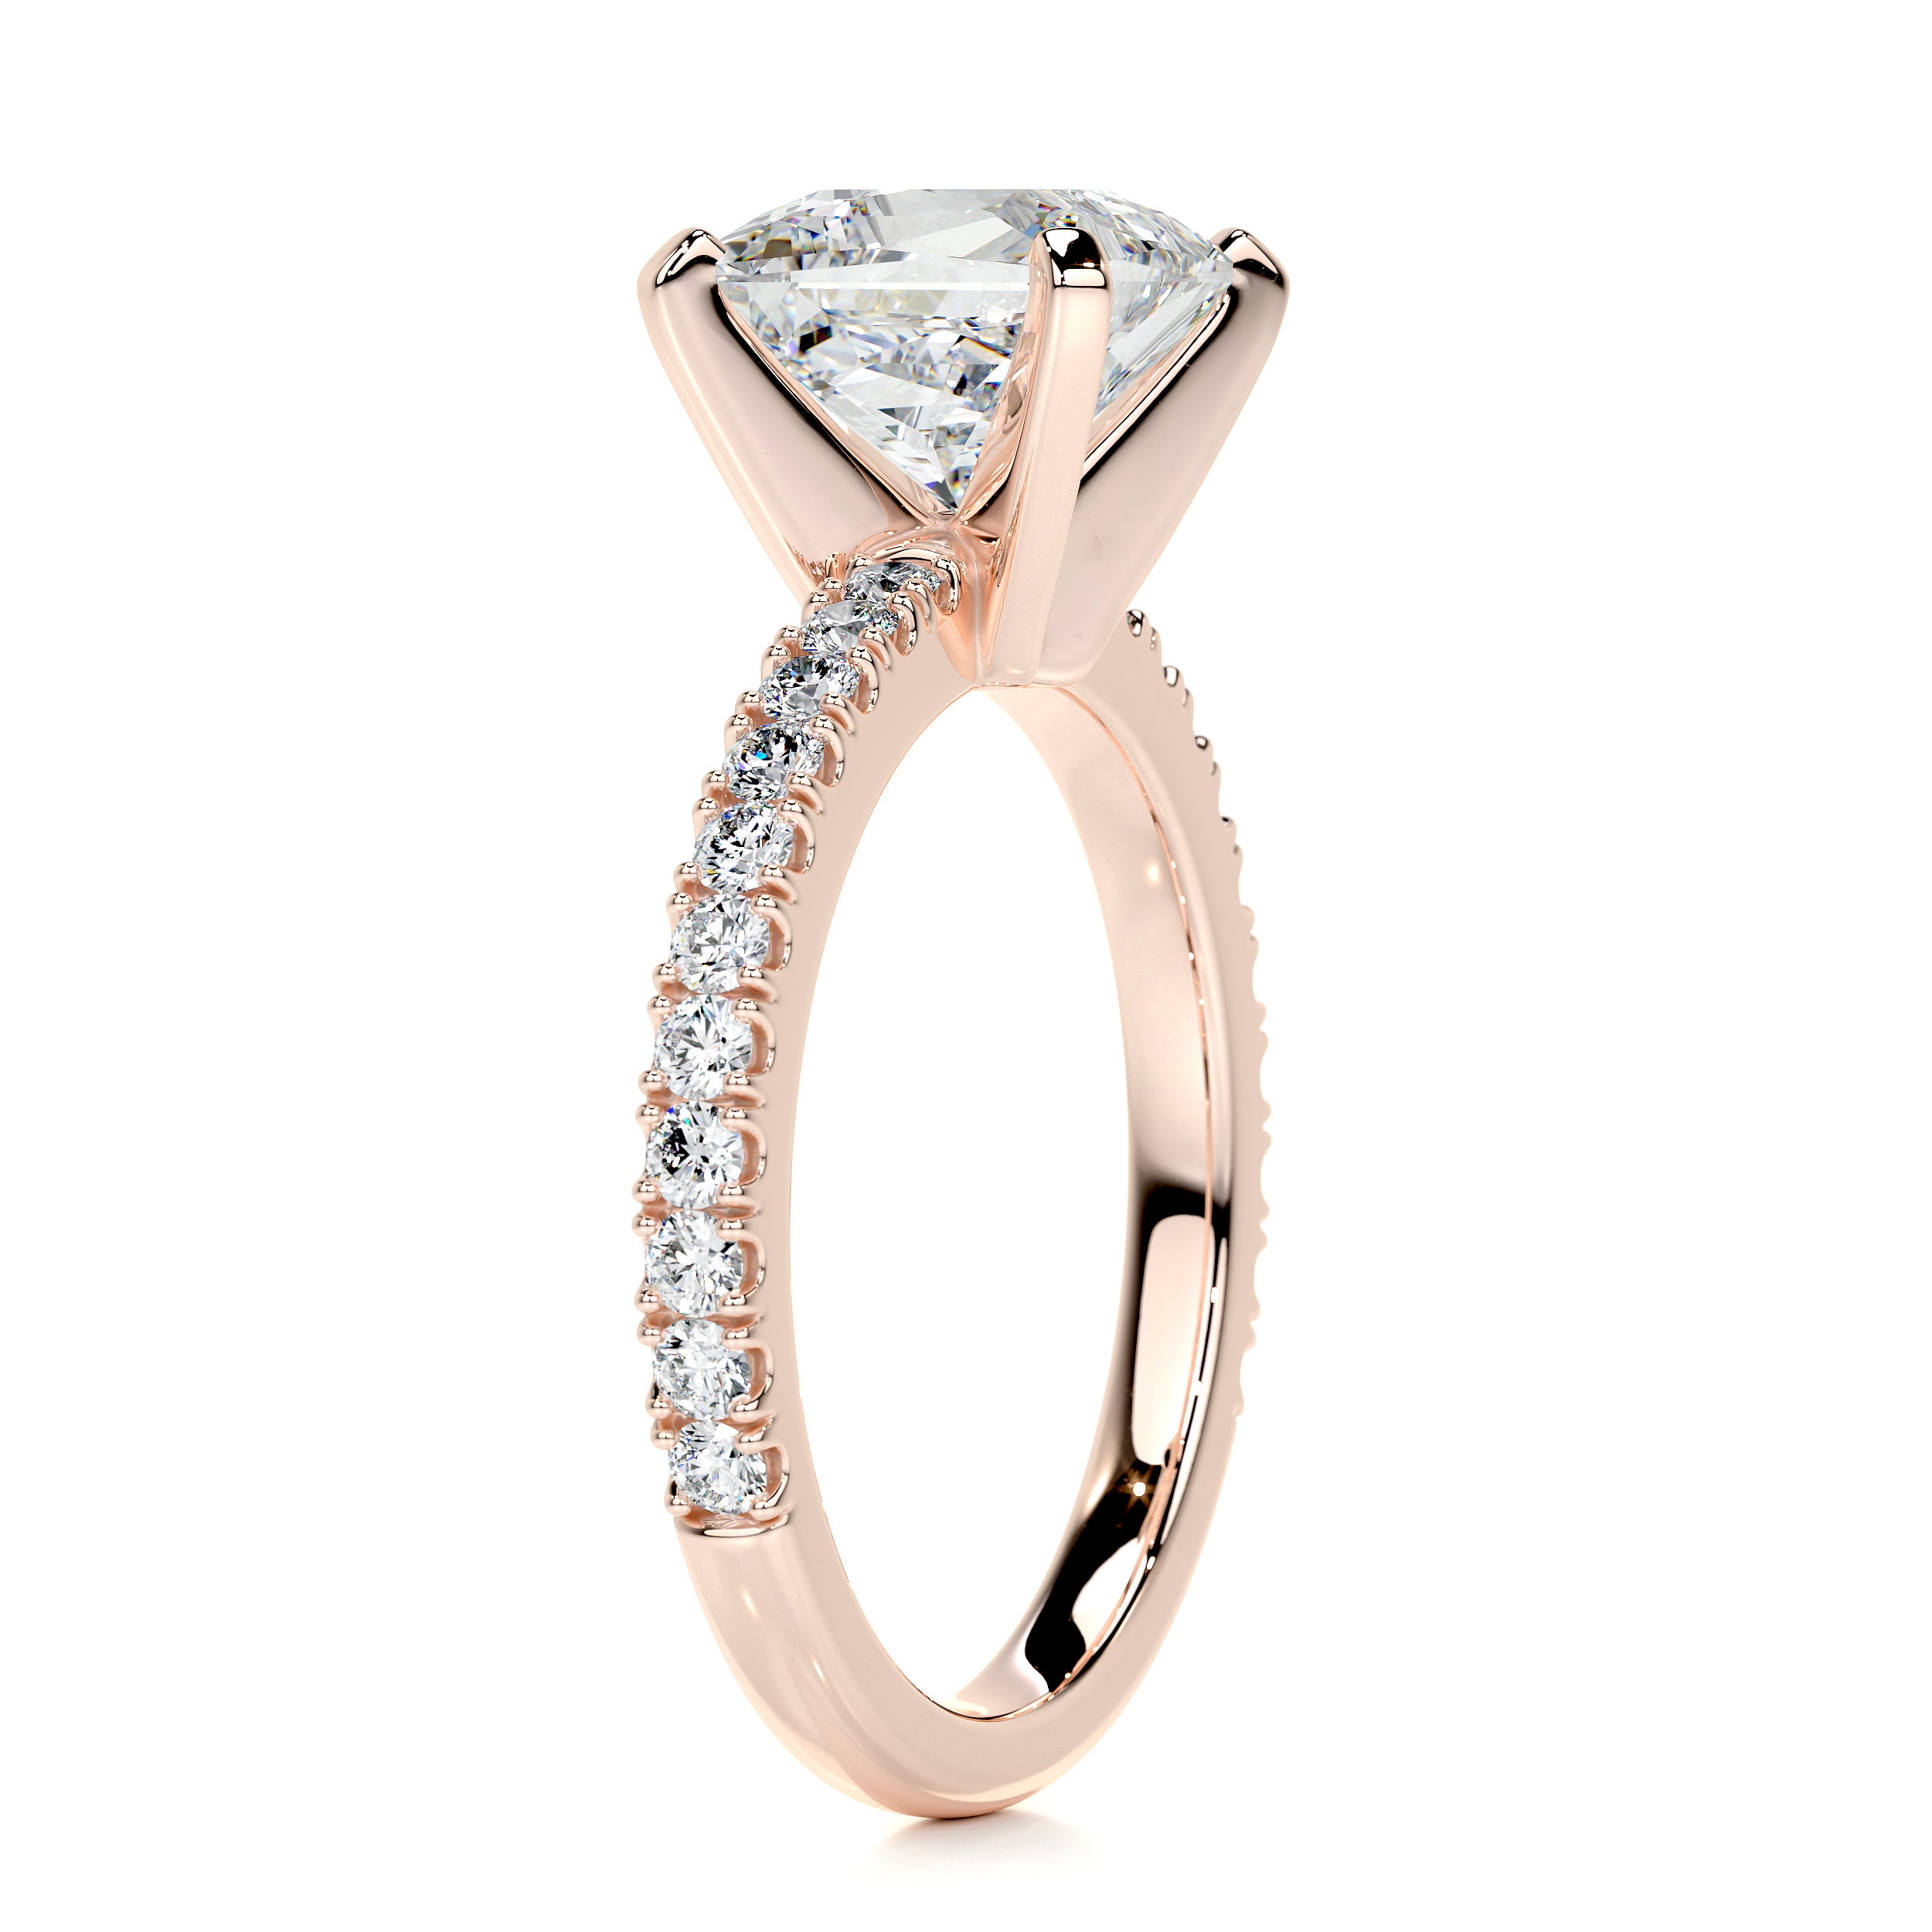 Stephanie Diamond Engagement Ring   (2.3 Carat) -14K Rose Gold